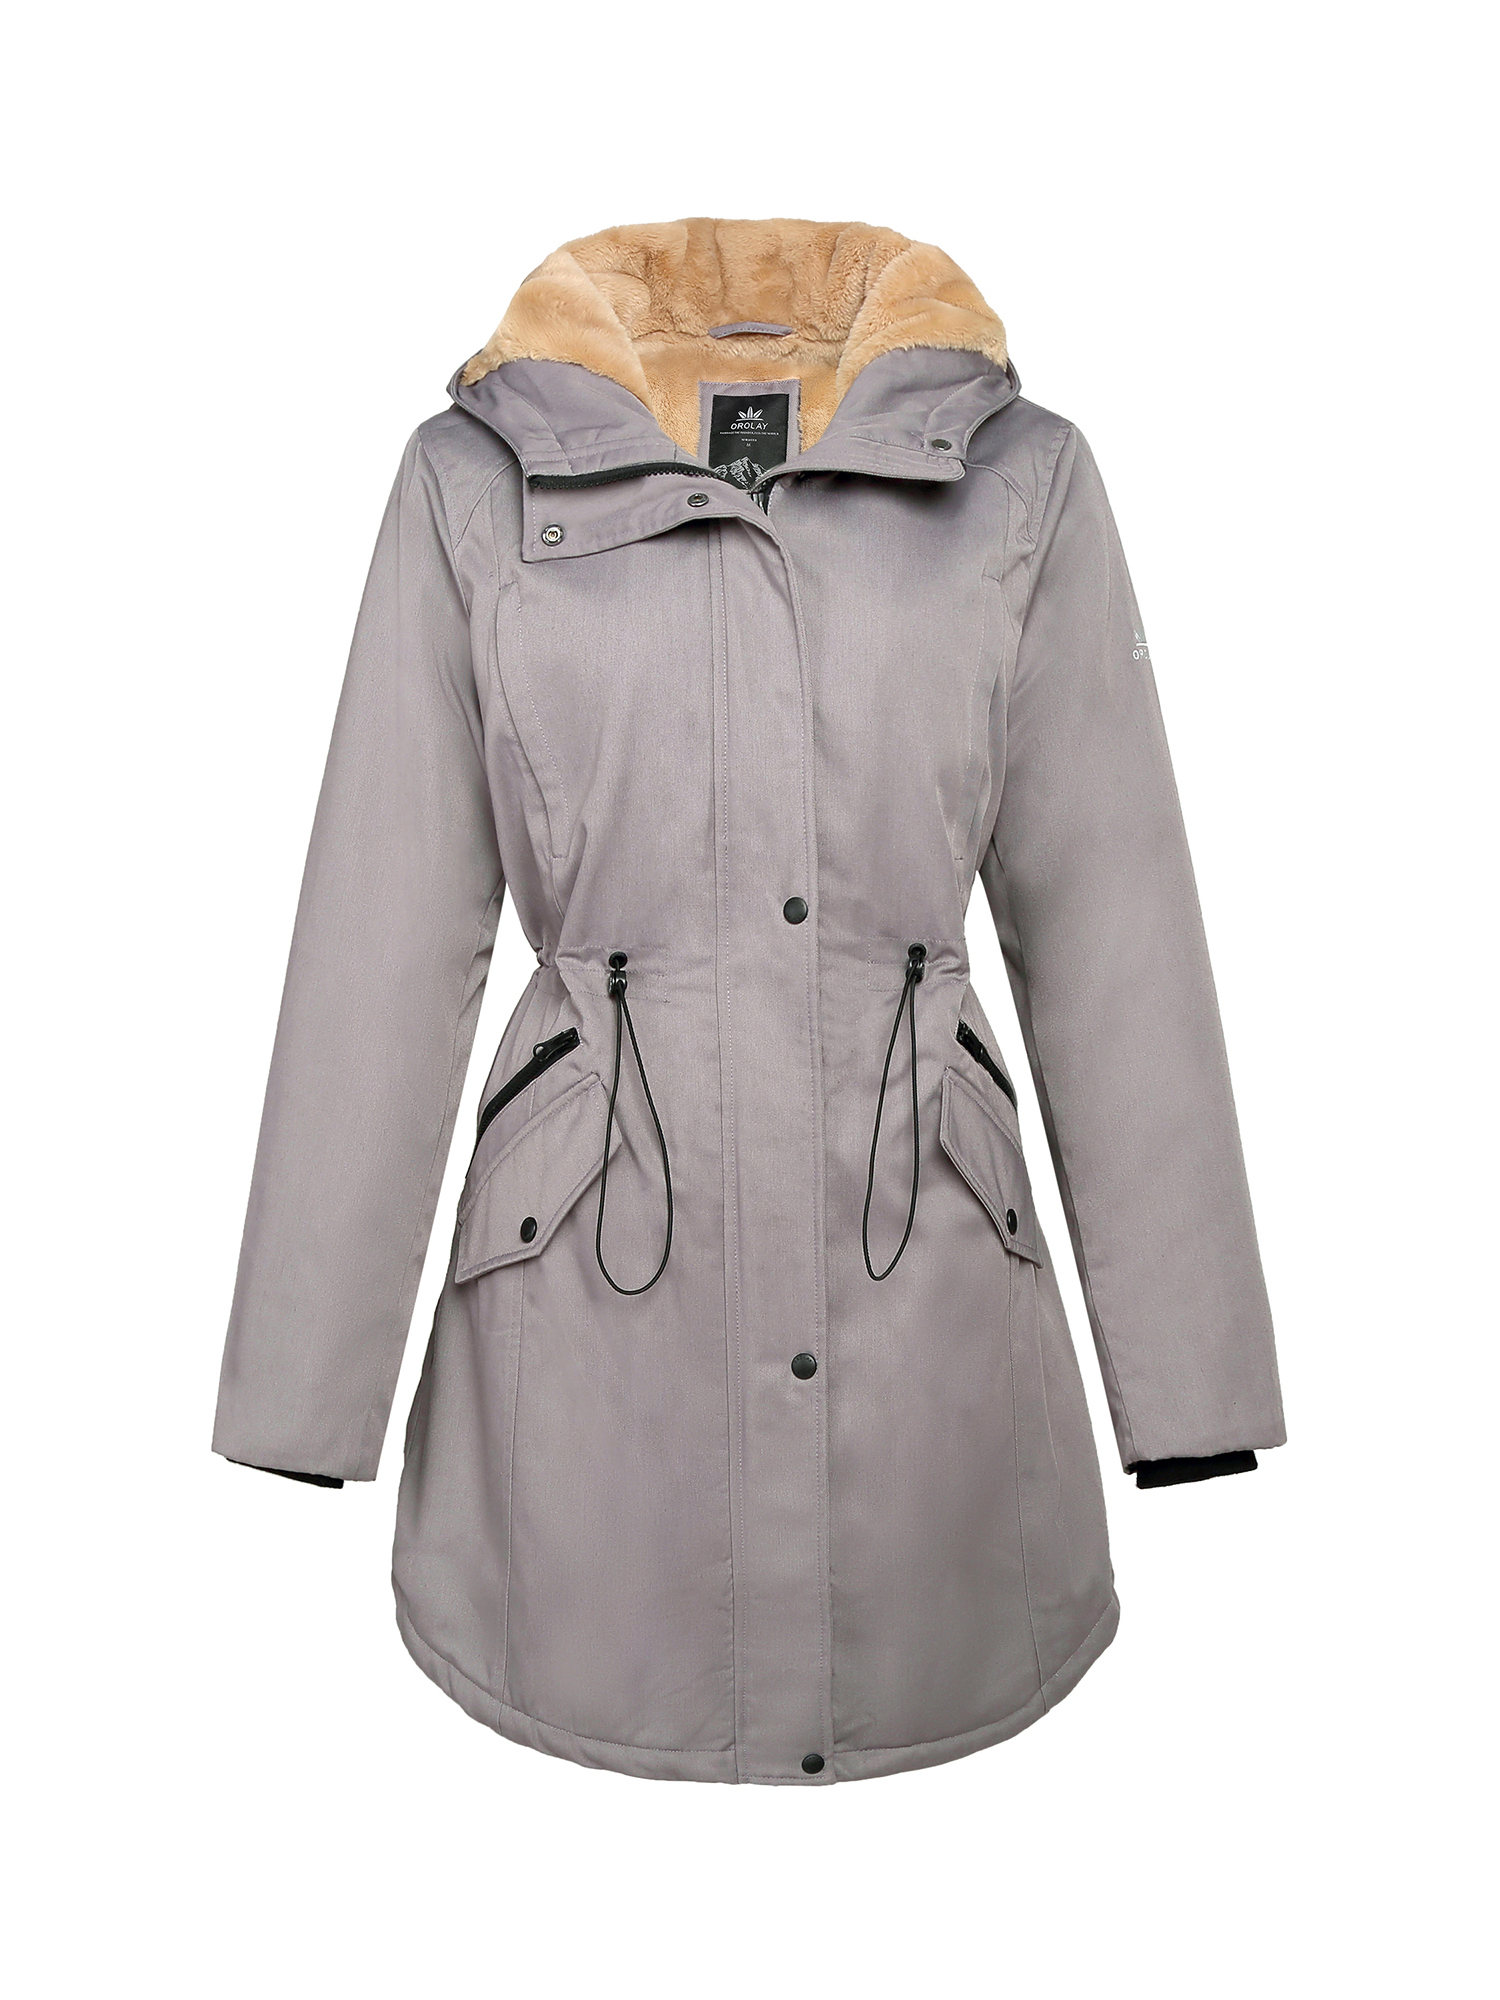 Orolay Women's Winter Parka Fleece Parka Warm Winter Coat Hoodie Jacket Mid length Winter Jacket Grey XL - image 1 of 5